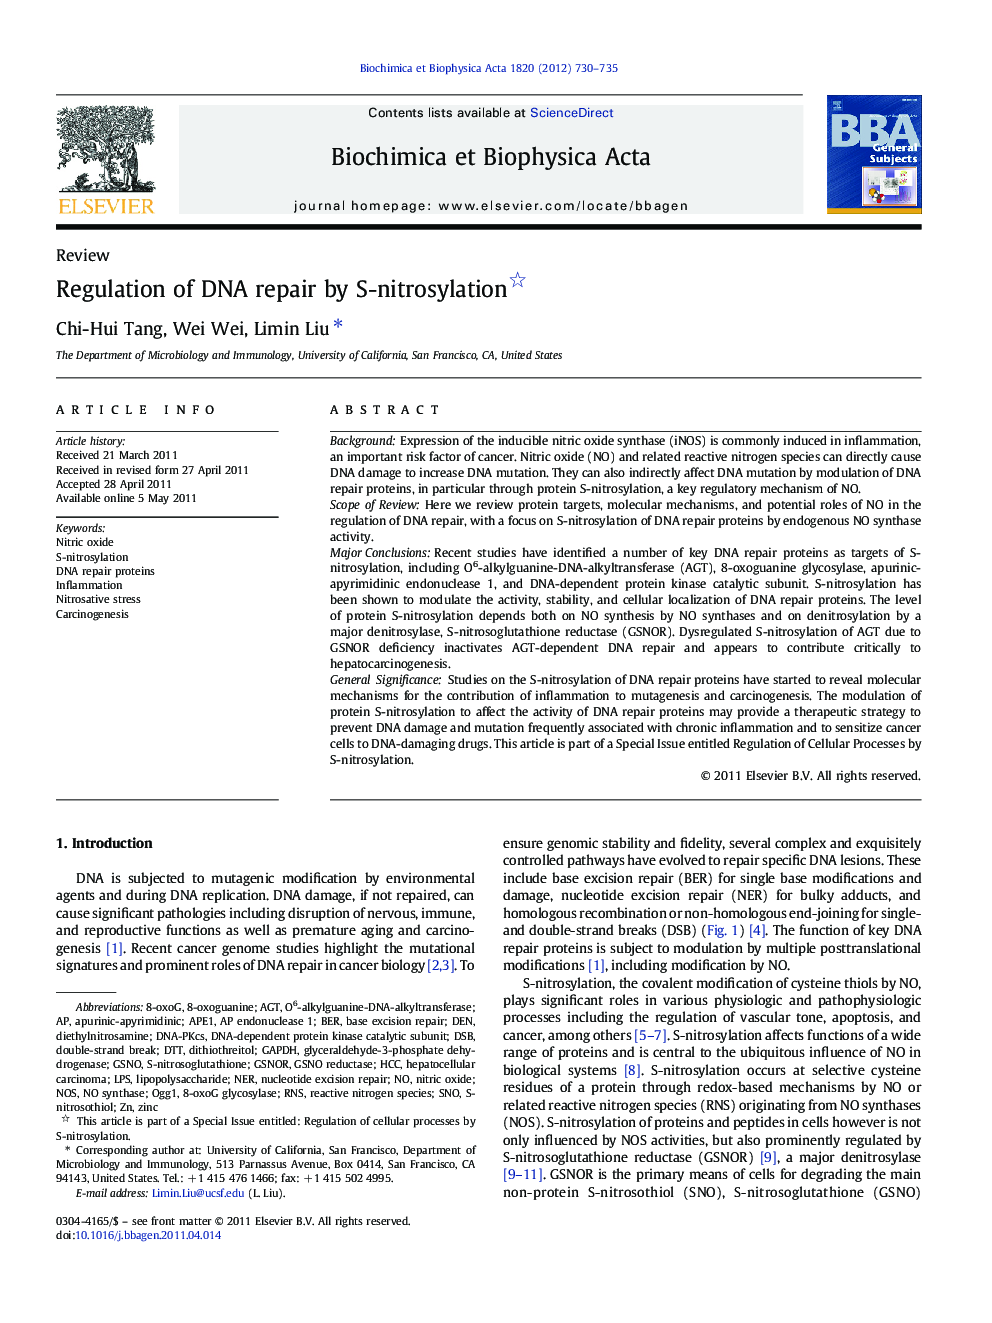 Regulation of DNA repair by S-nitrosylation